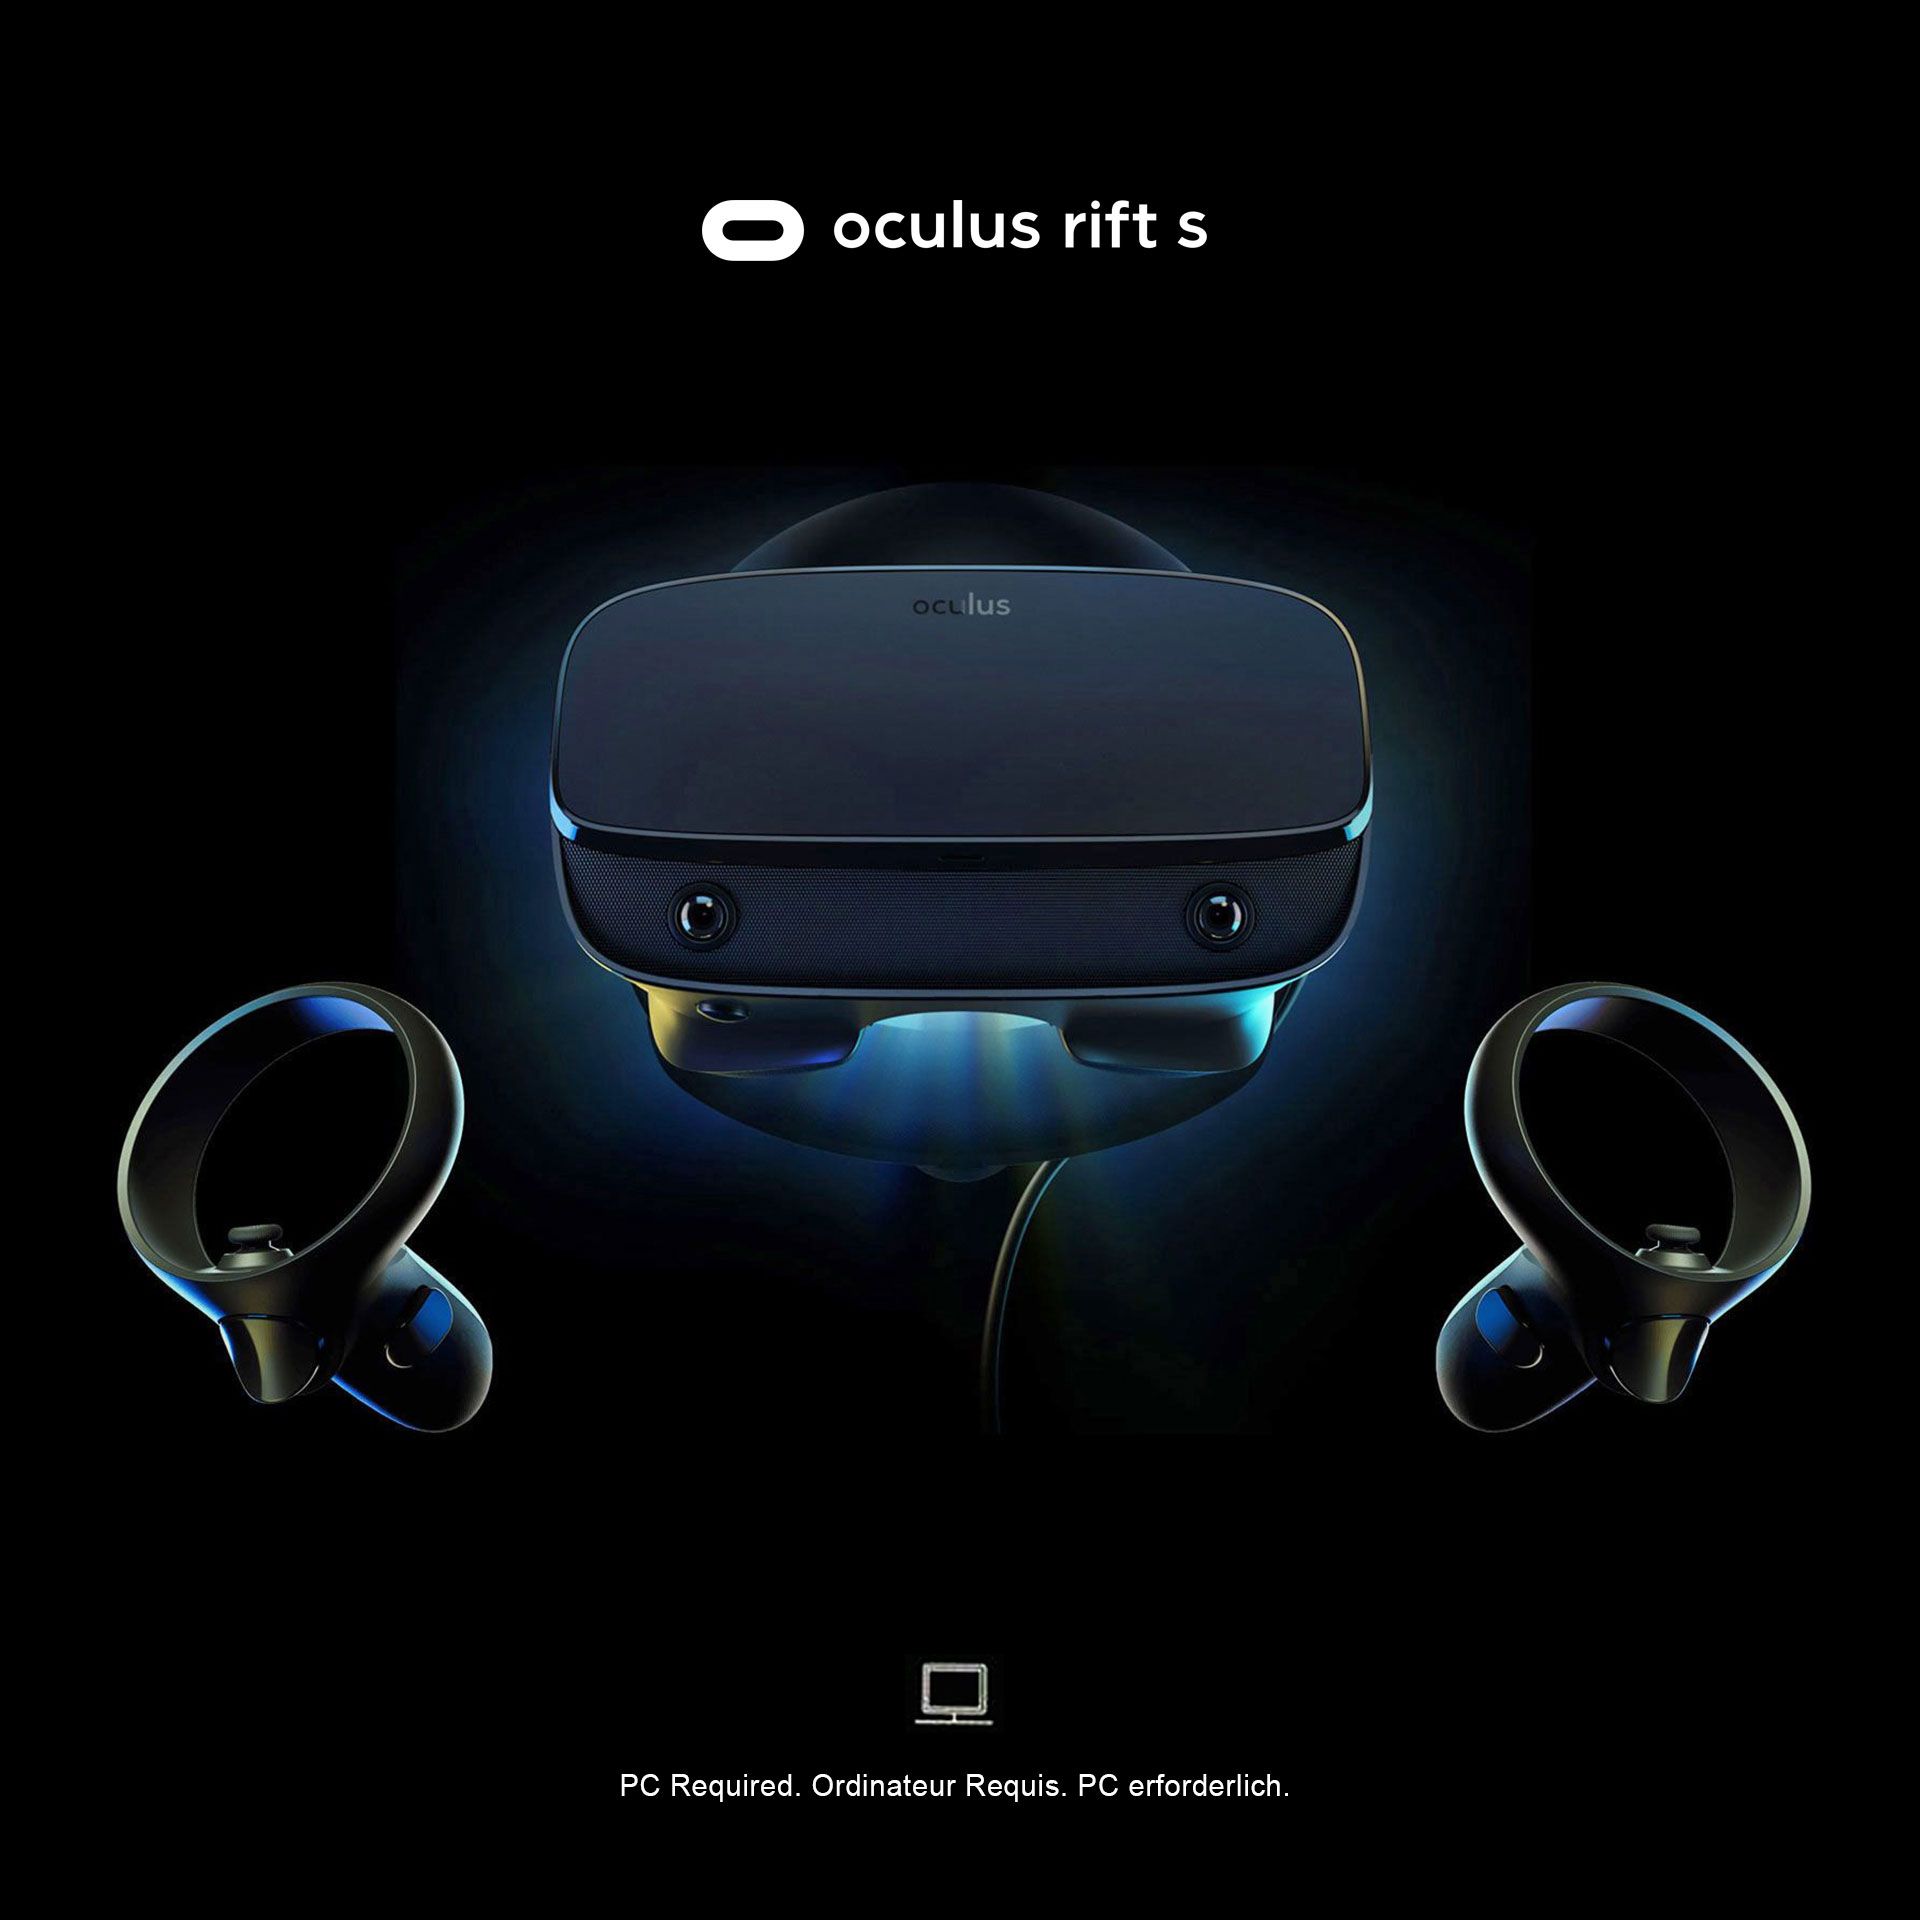 oculus rift pre owned